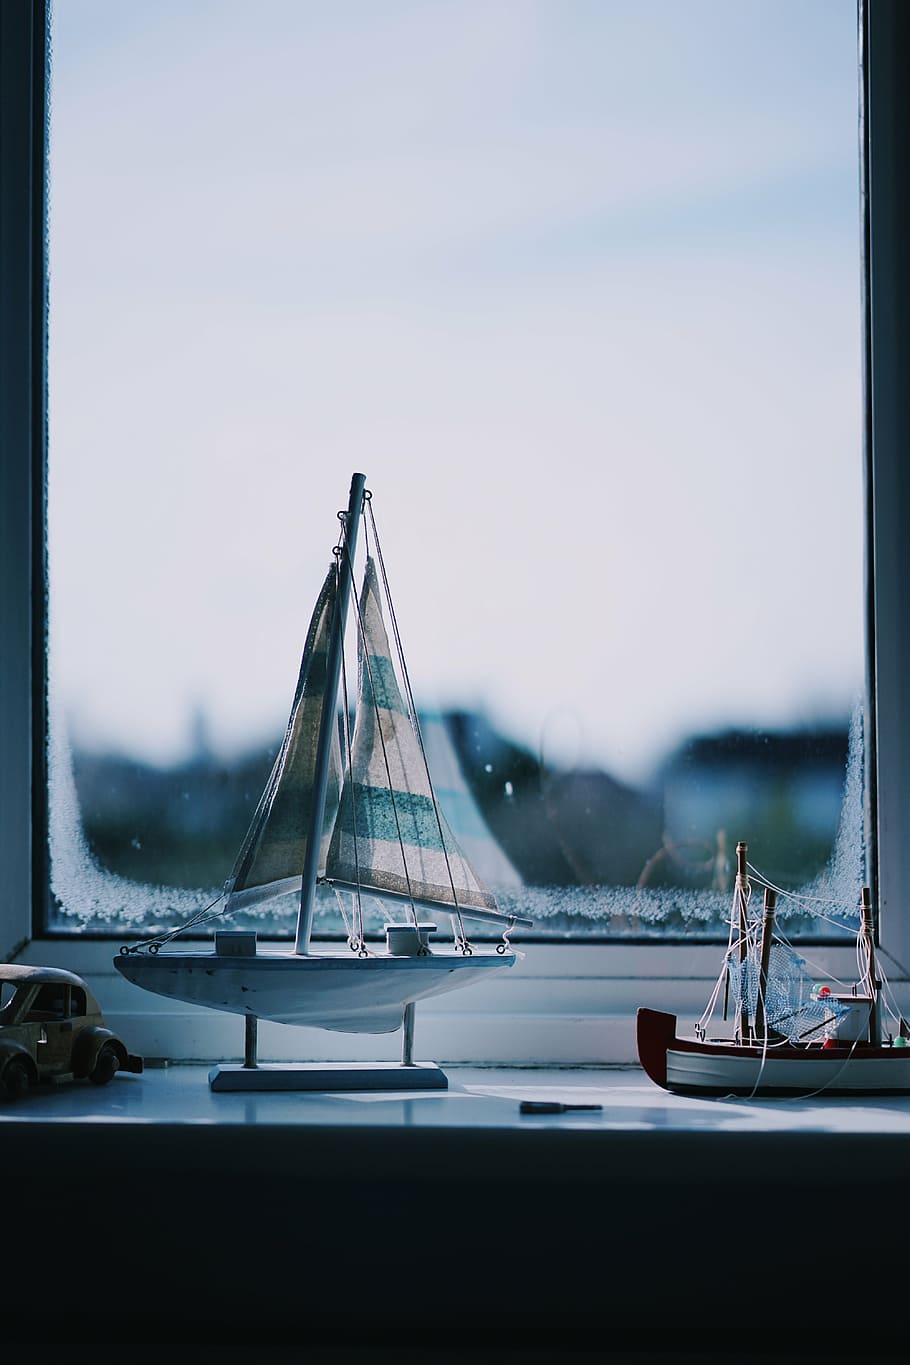 miniatur, model perahu layar, jendela, dua, putih, berlayar, kapal, di samping, kaca, benda